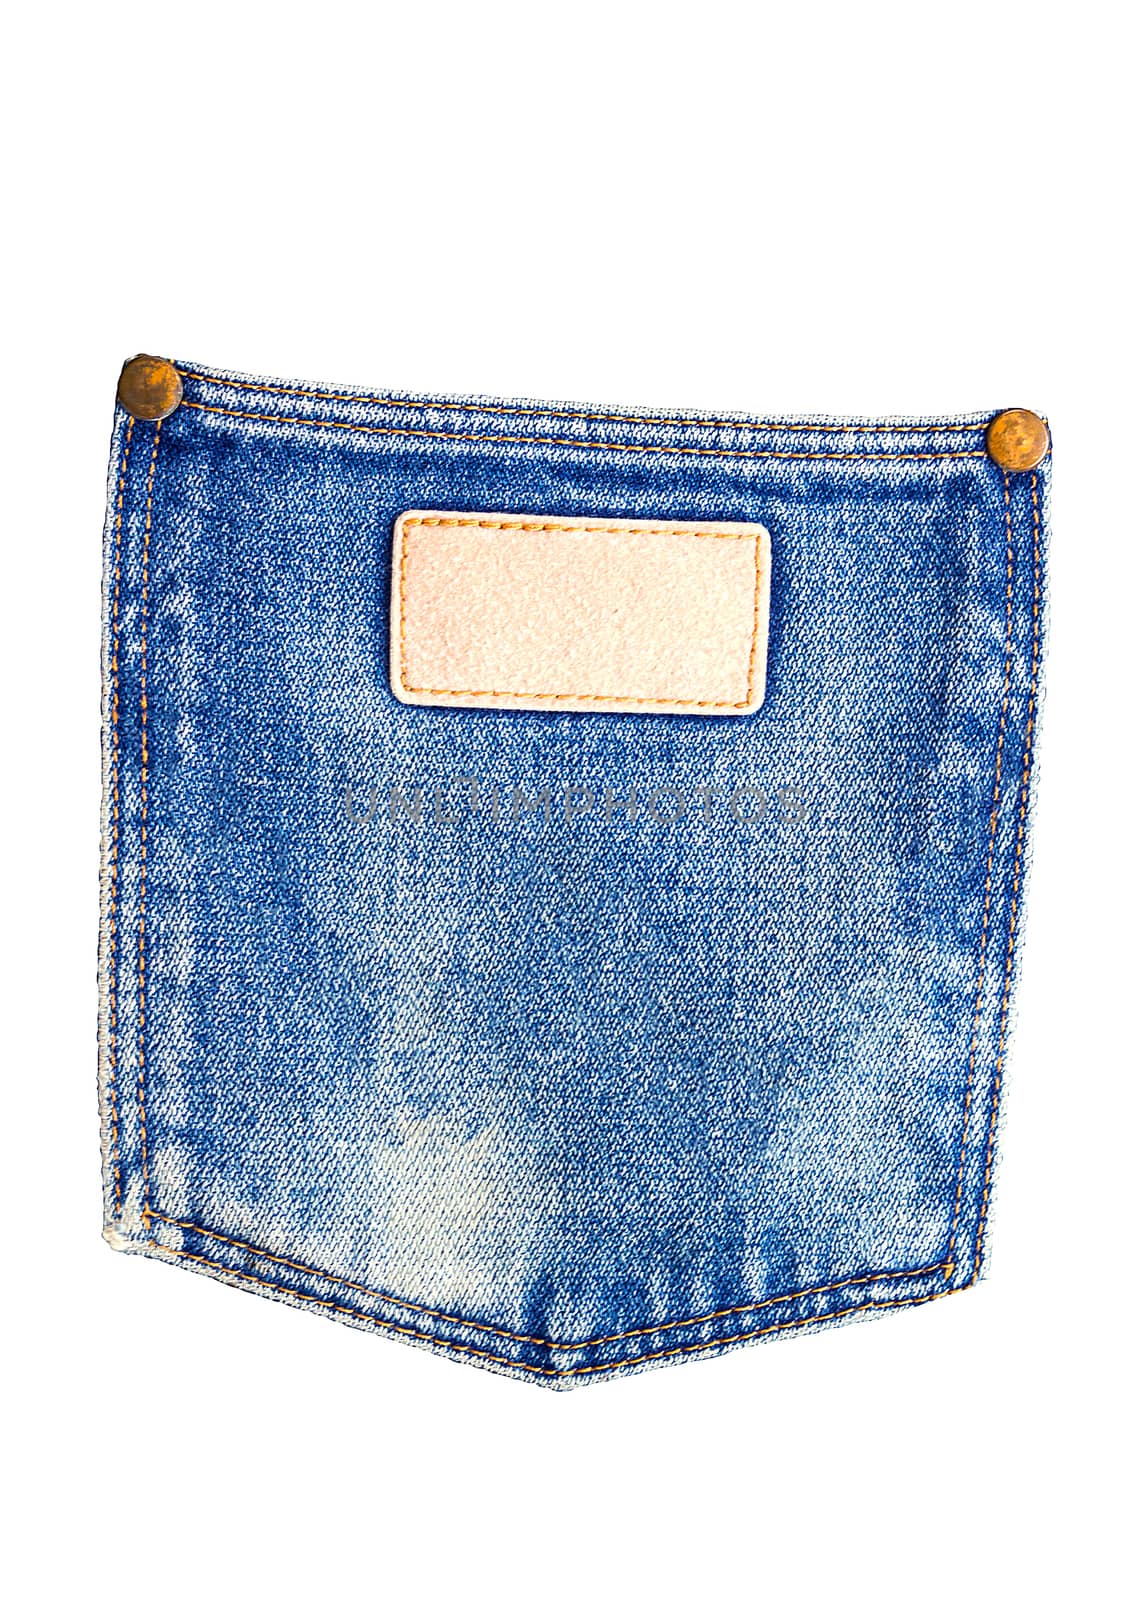 denim blue jean pocket texture is the classic indigo fashion. De by rakoptonLPN